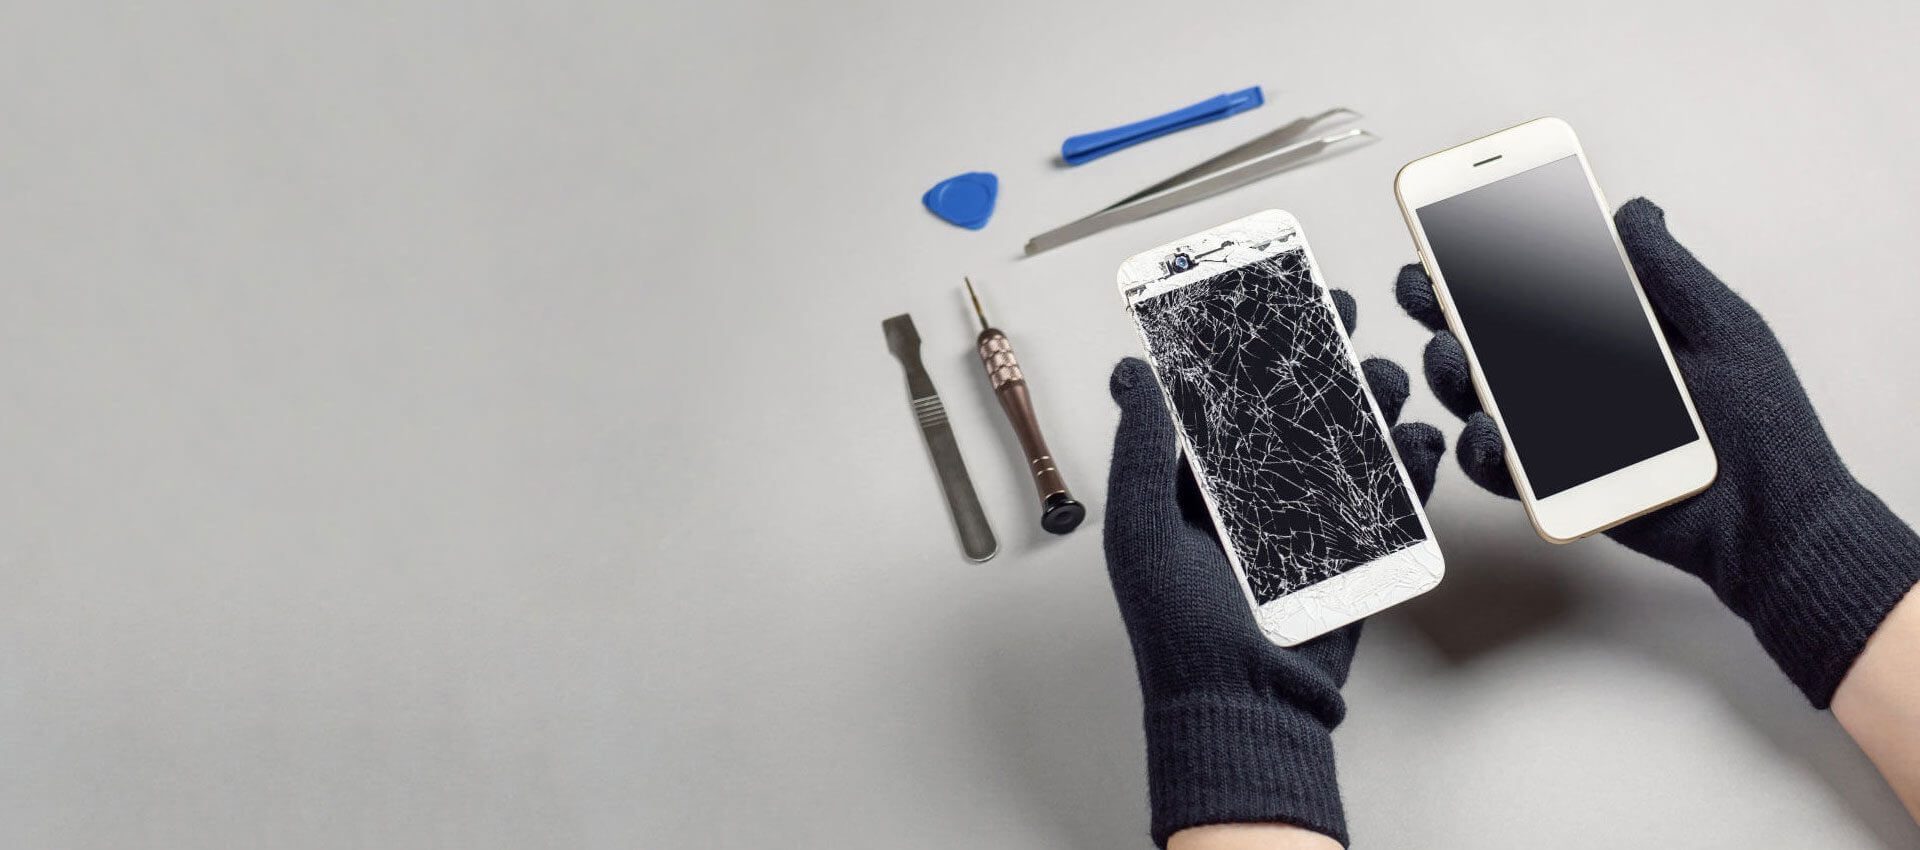 Fast Repair Your Smartphones